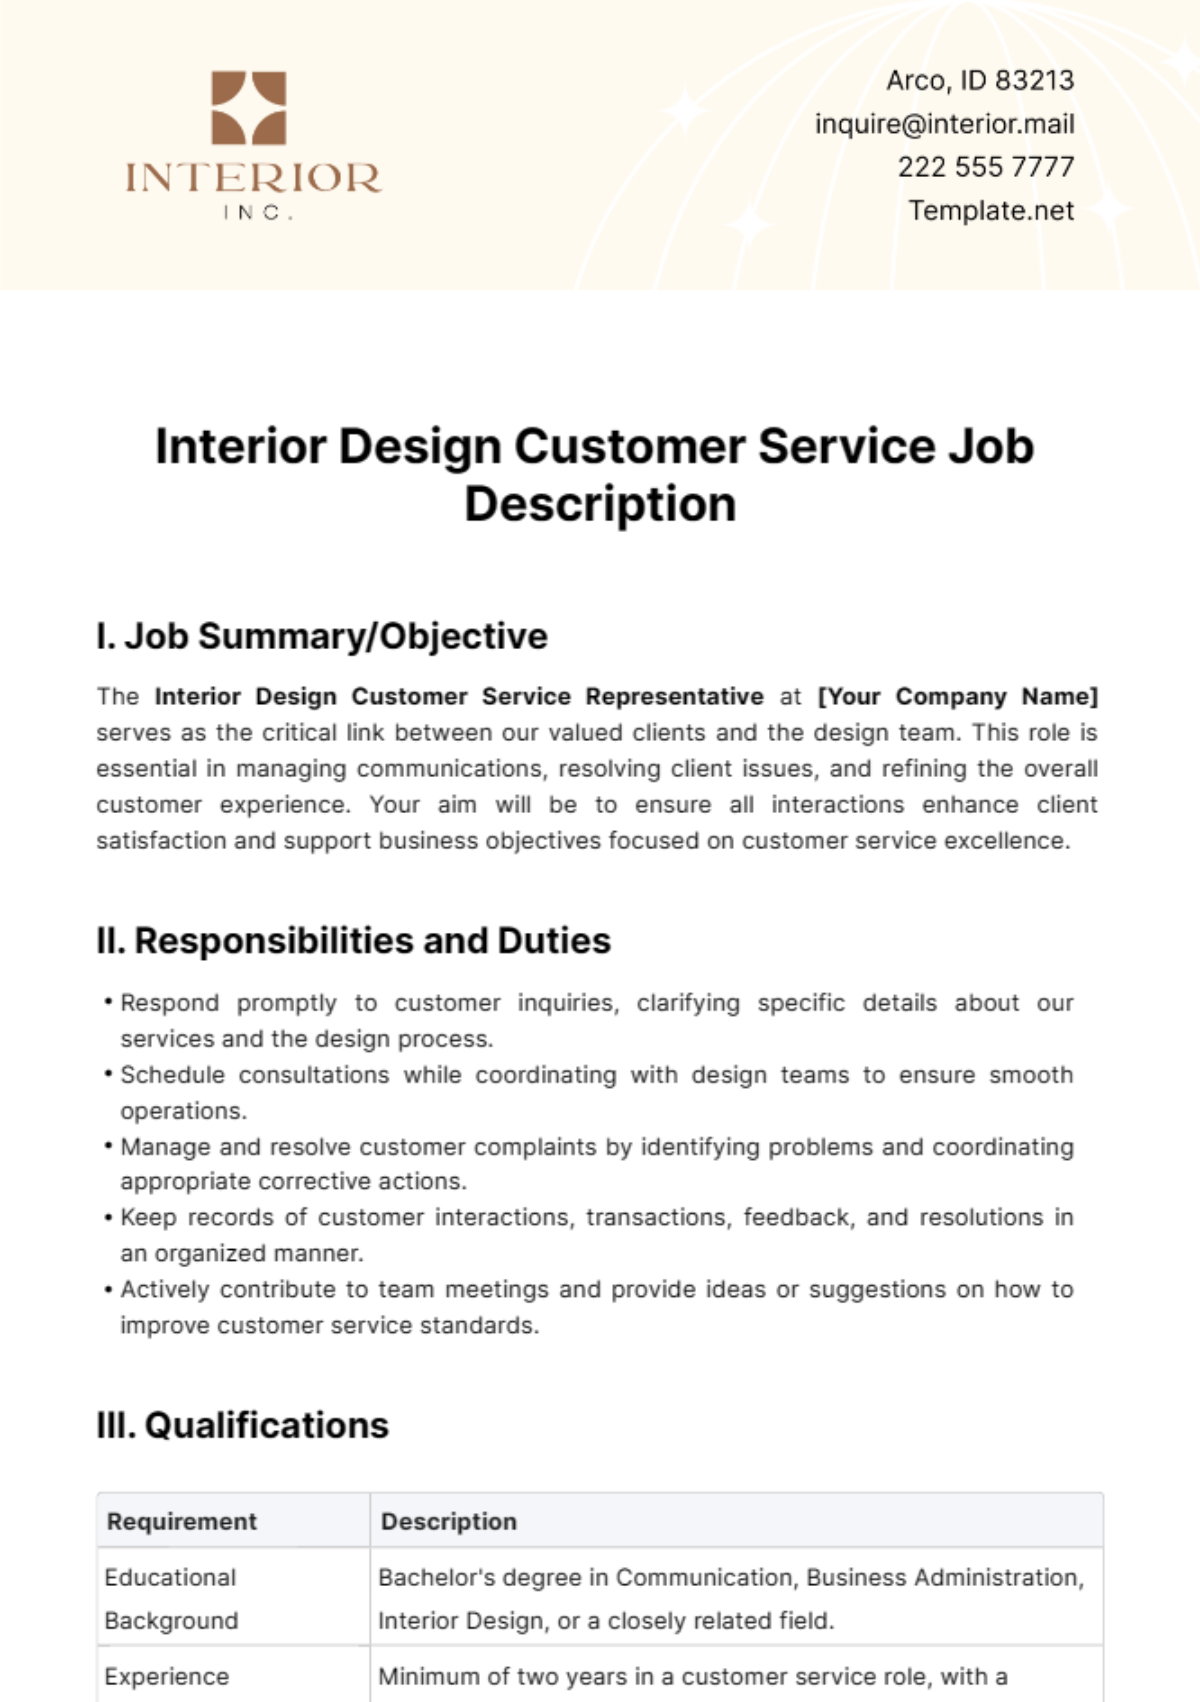 Free Interior Design Customer Service Job Description Template